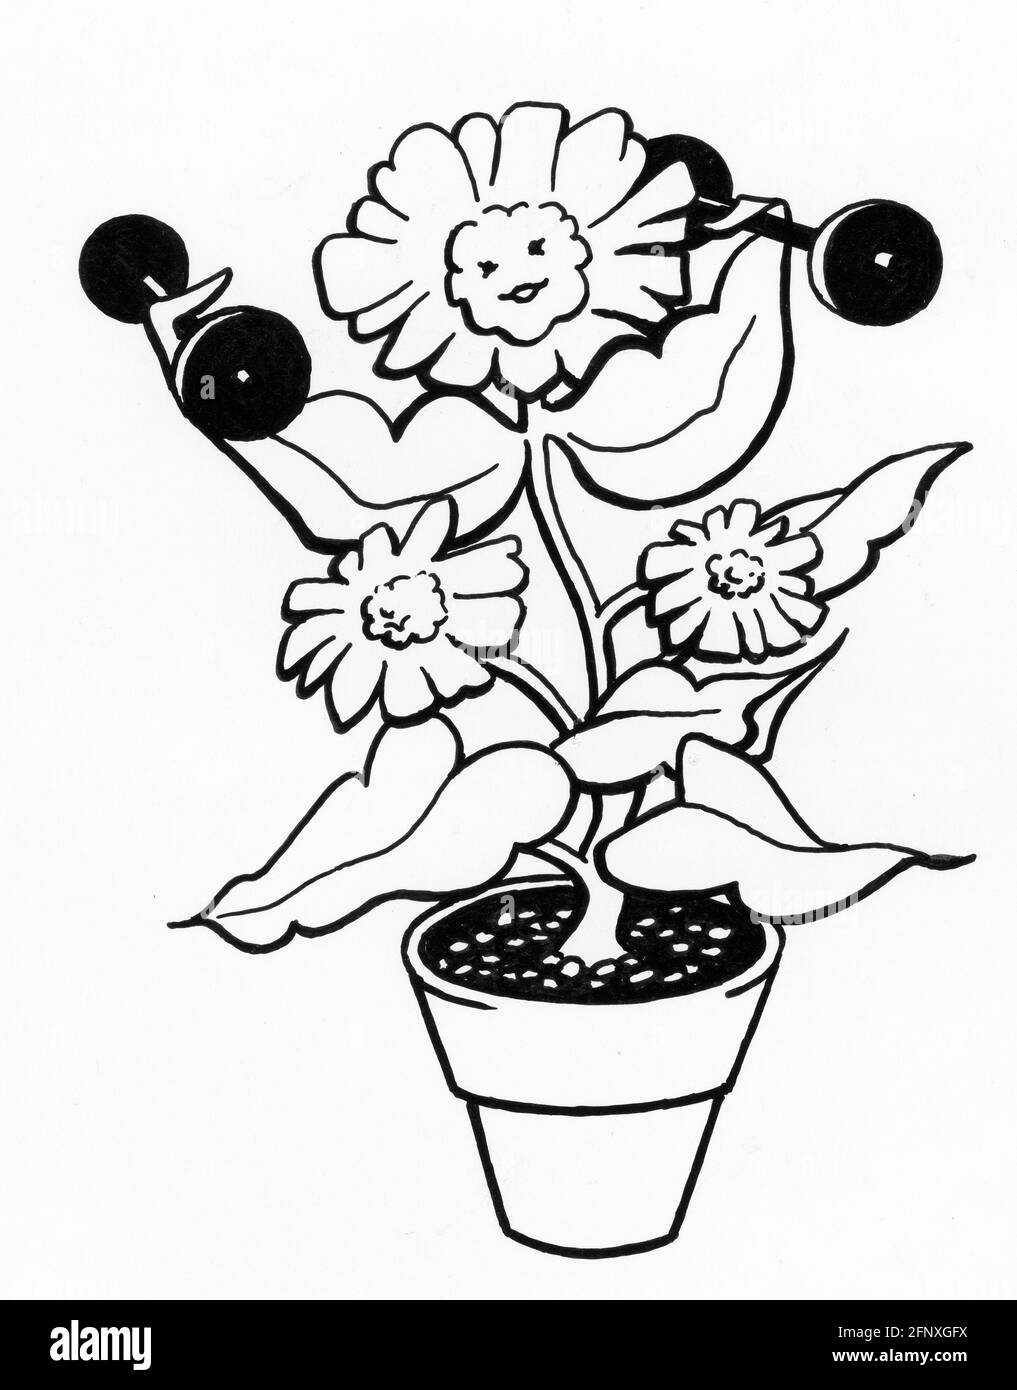 Cartoon flower pot Black and White Stock Photos & Images - Alamy